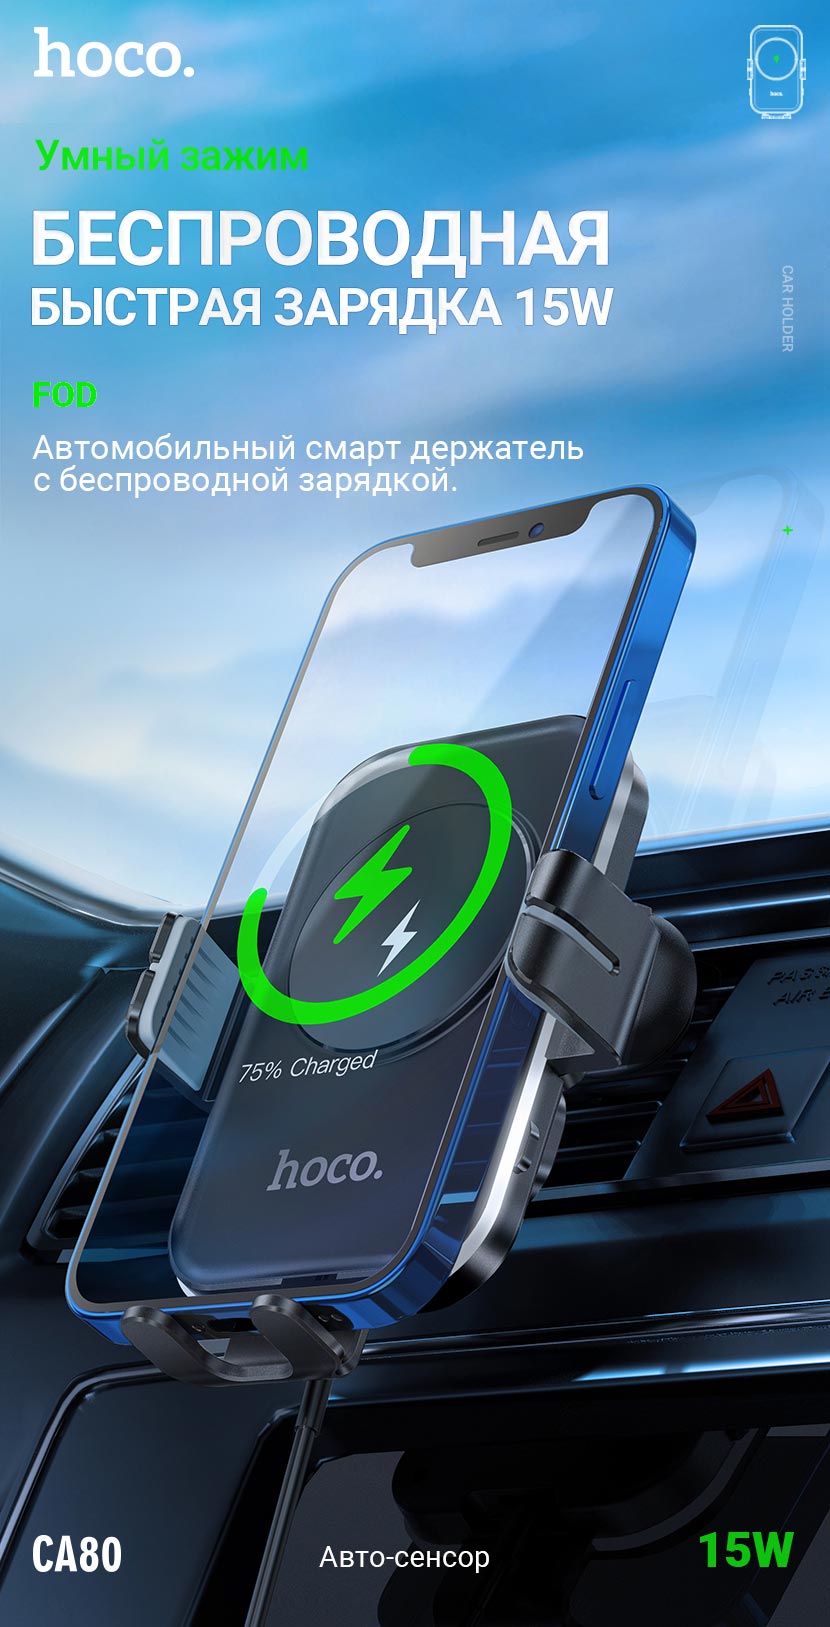 hoco news ca80 buddy smart wireless charging car holder ru